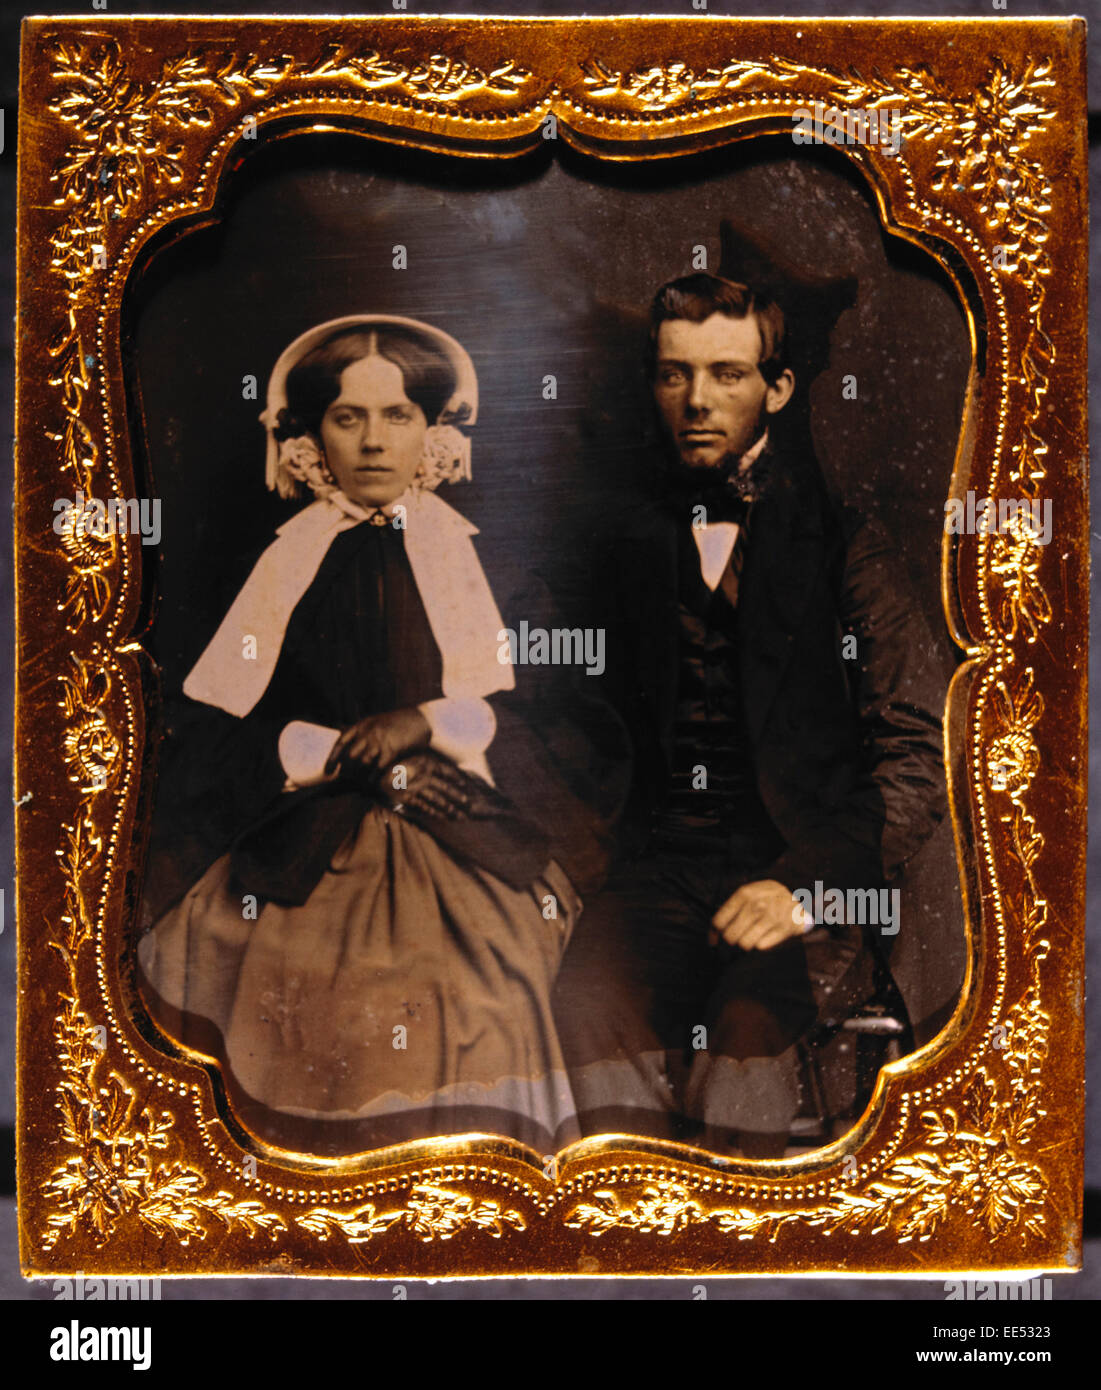 Couple in Formal Attire, Portrait, Daguerreotype, circa 1850's Stock Photo